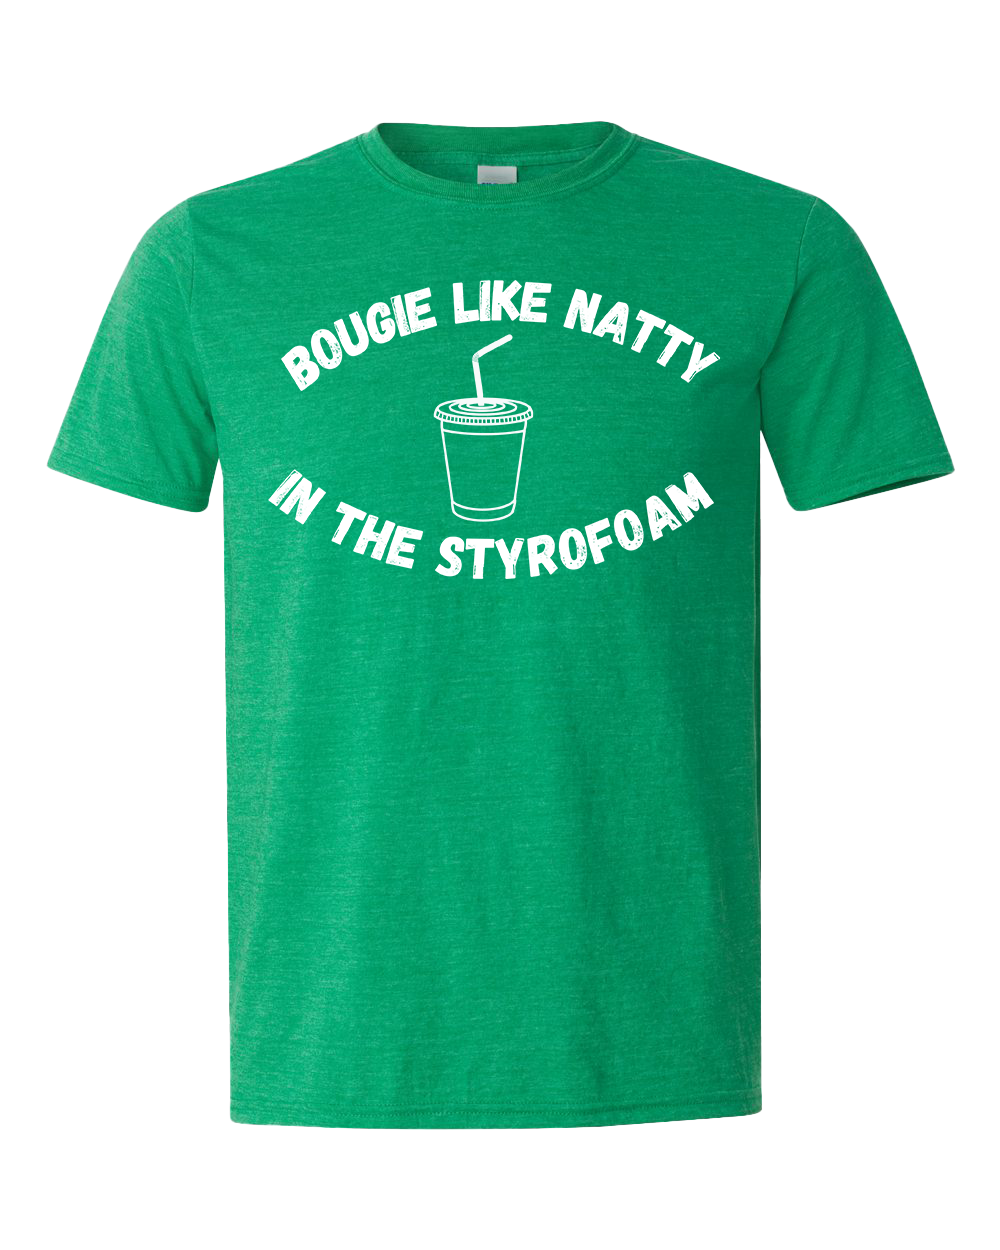 Bougie Like Natty Tshirt - Various Colors